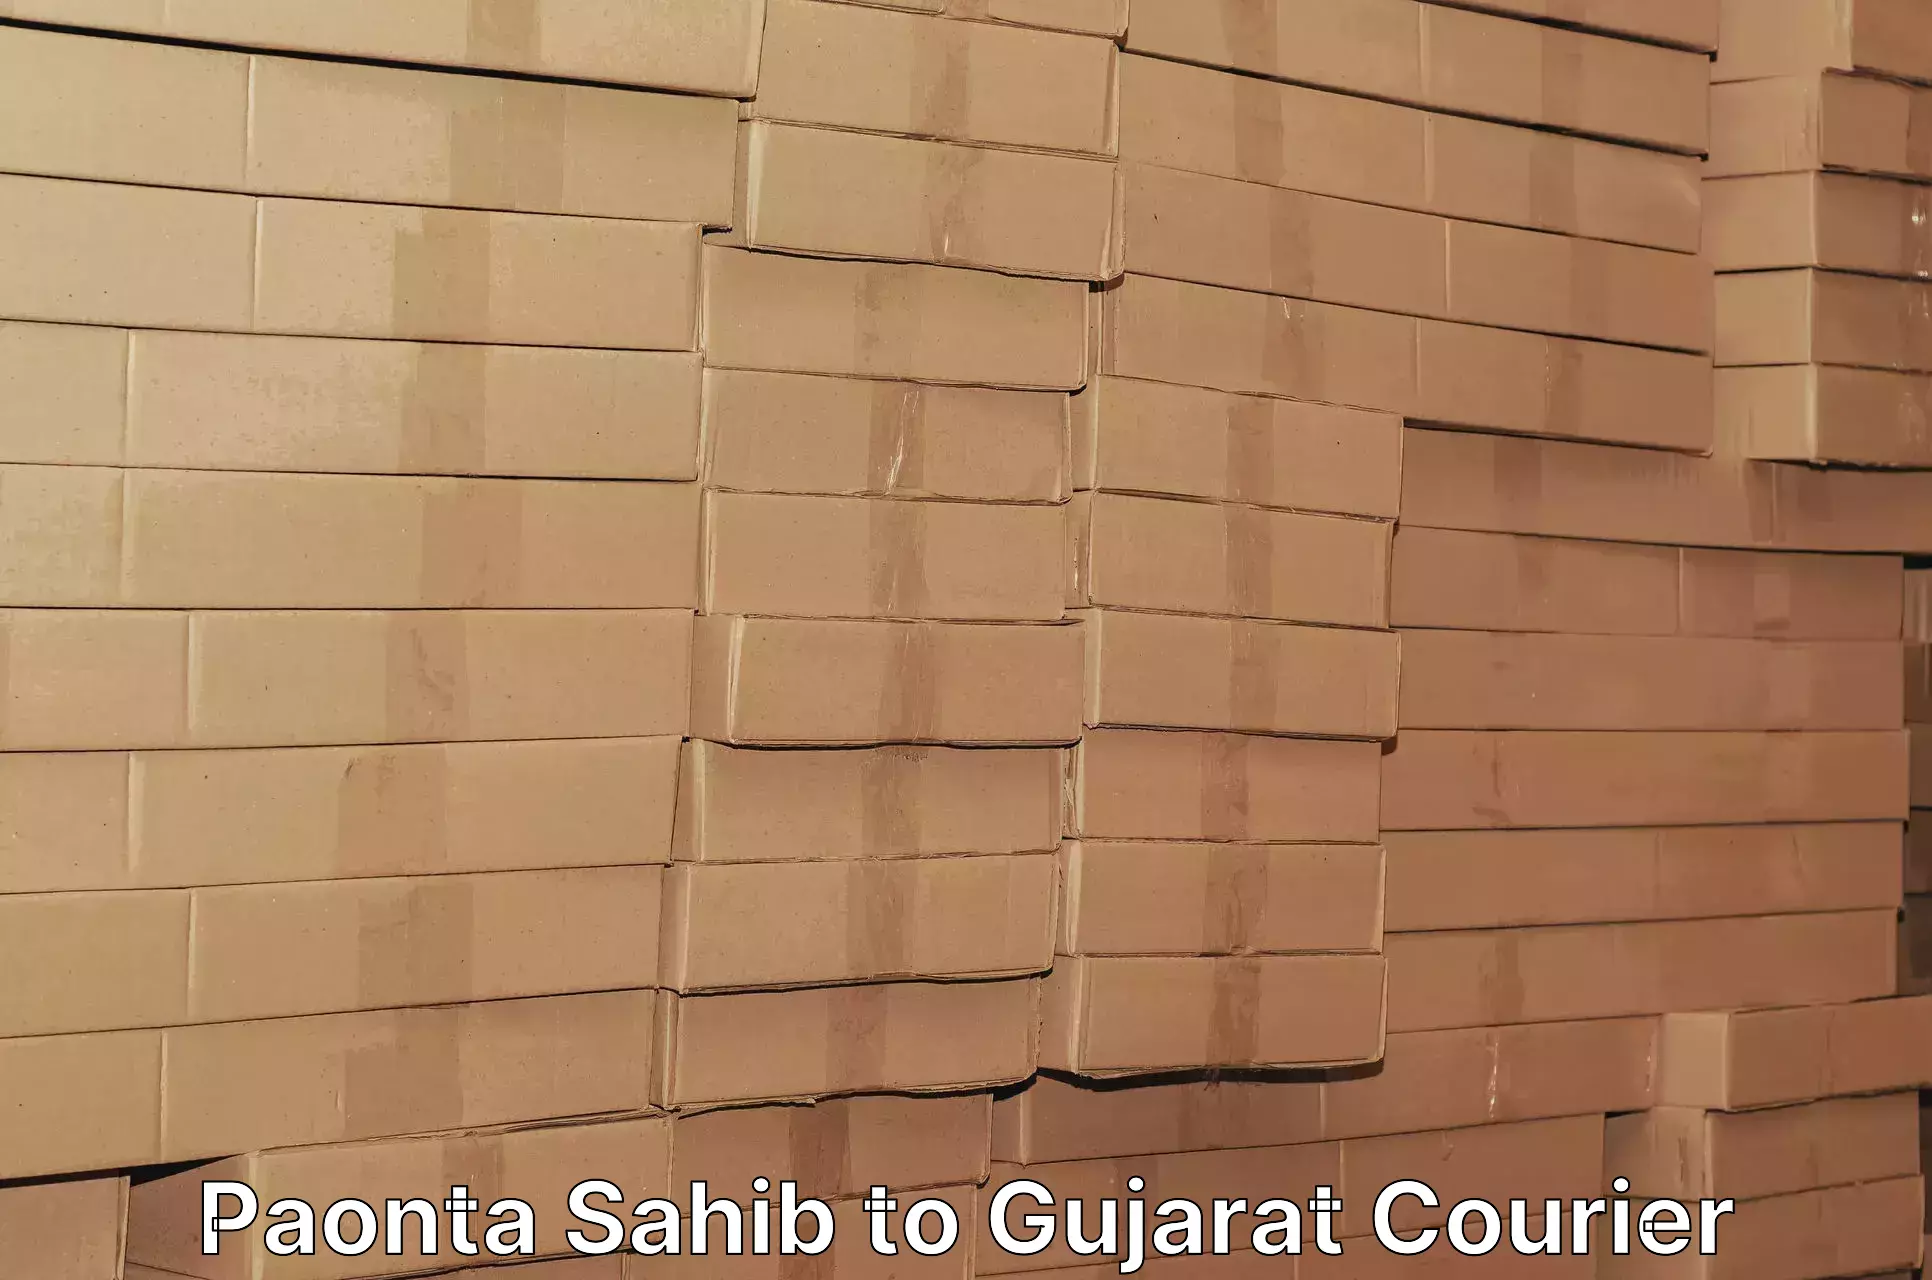 Supply chain efficiency in Paonta Sahib to Gujarat